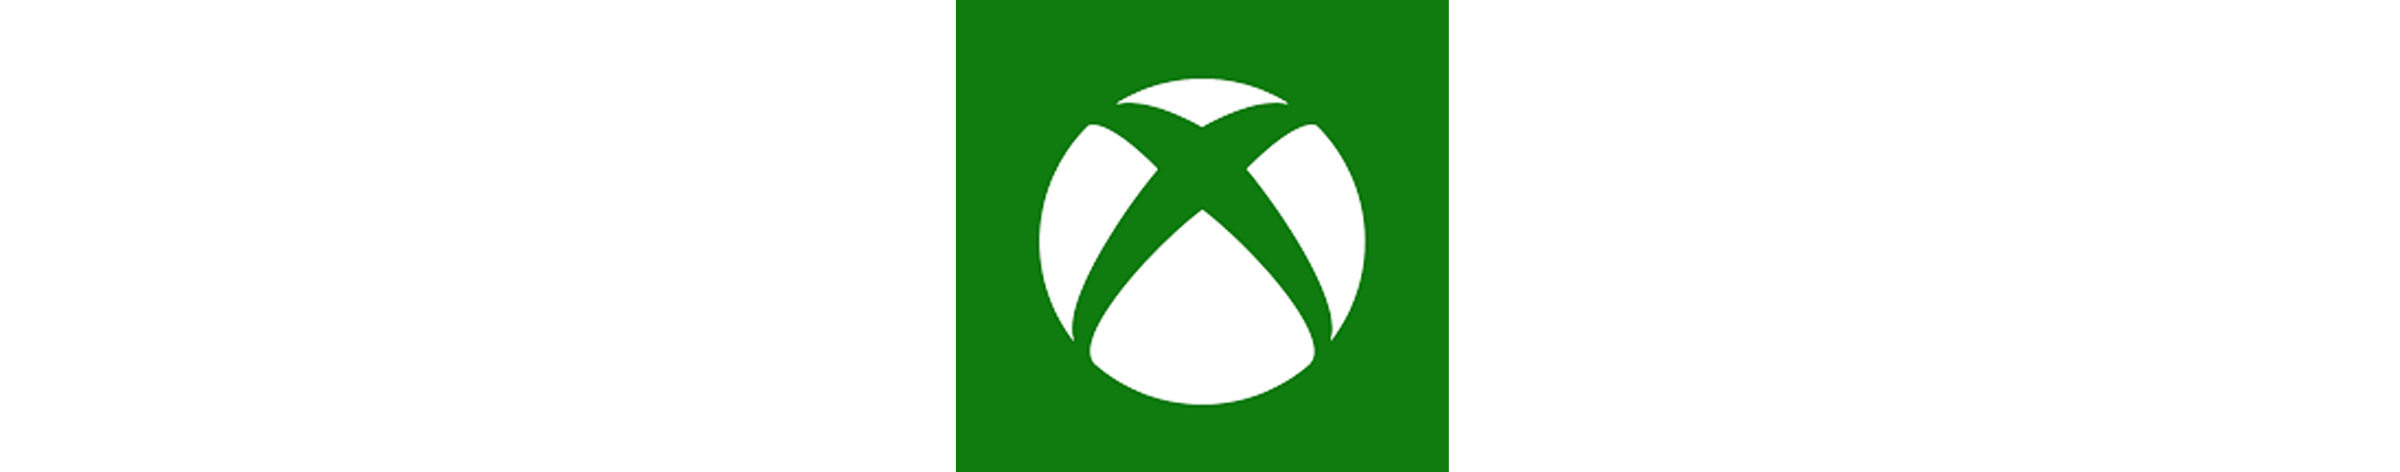 Xbox New Releases